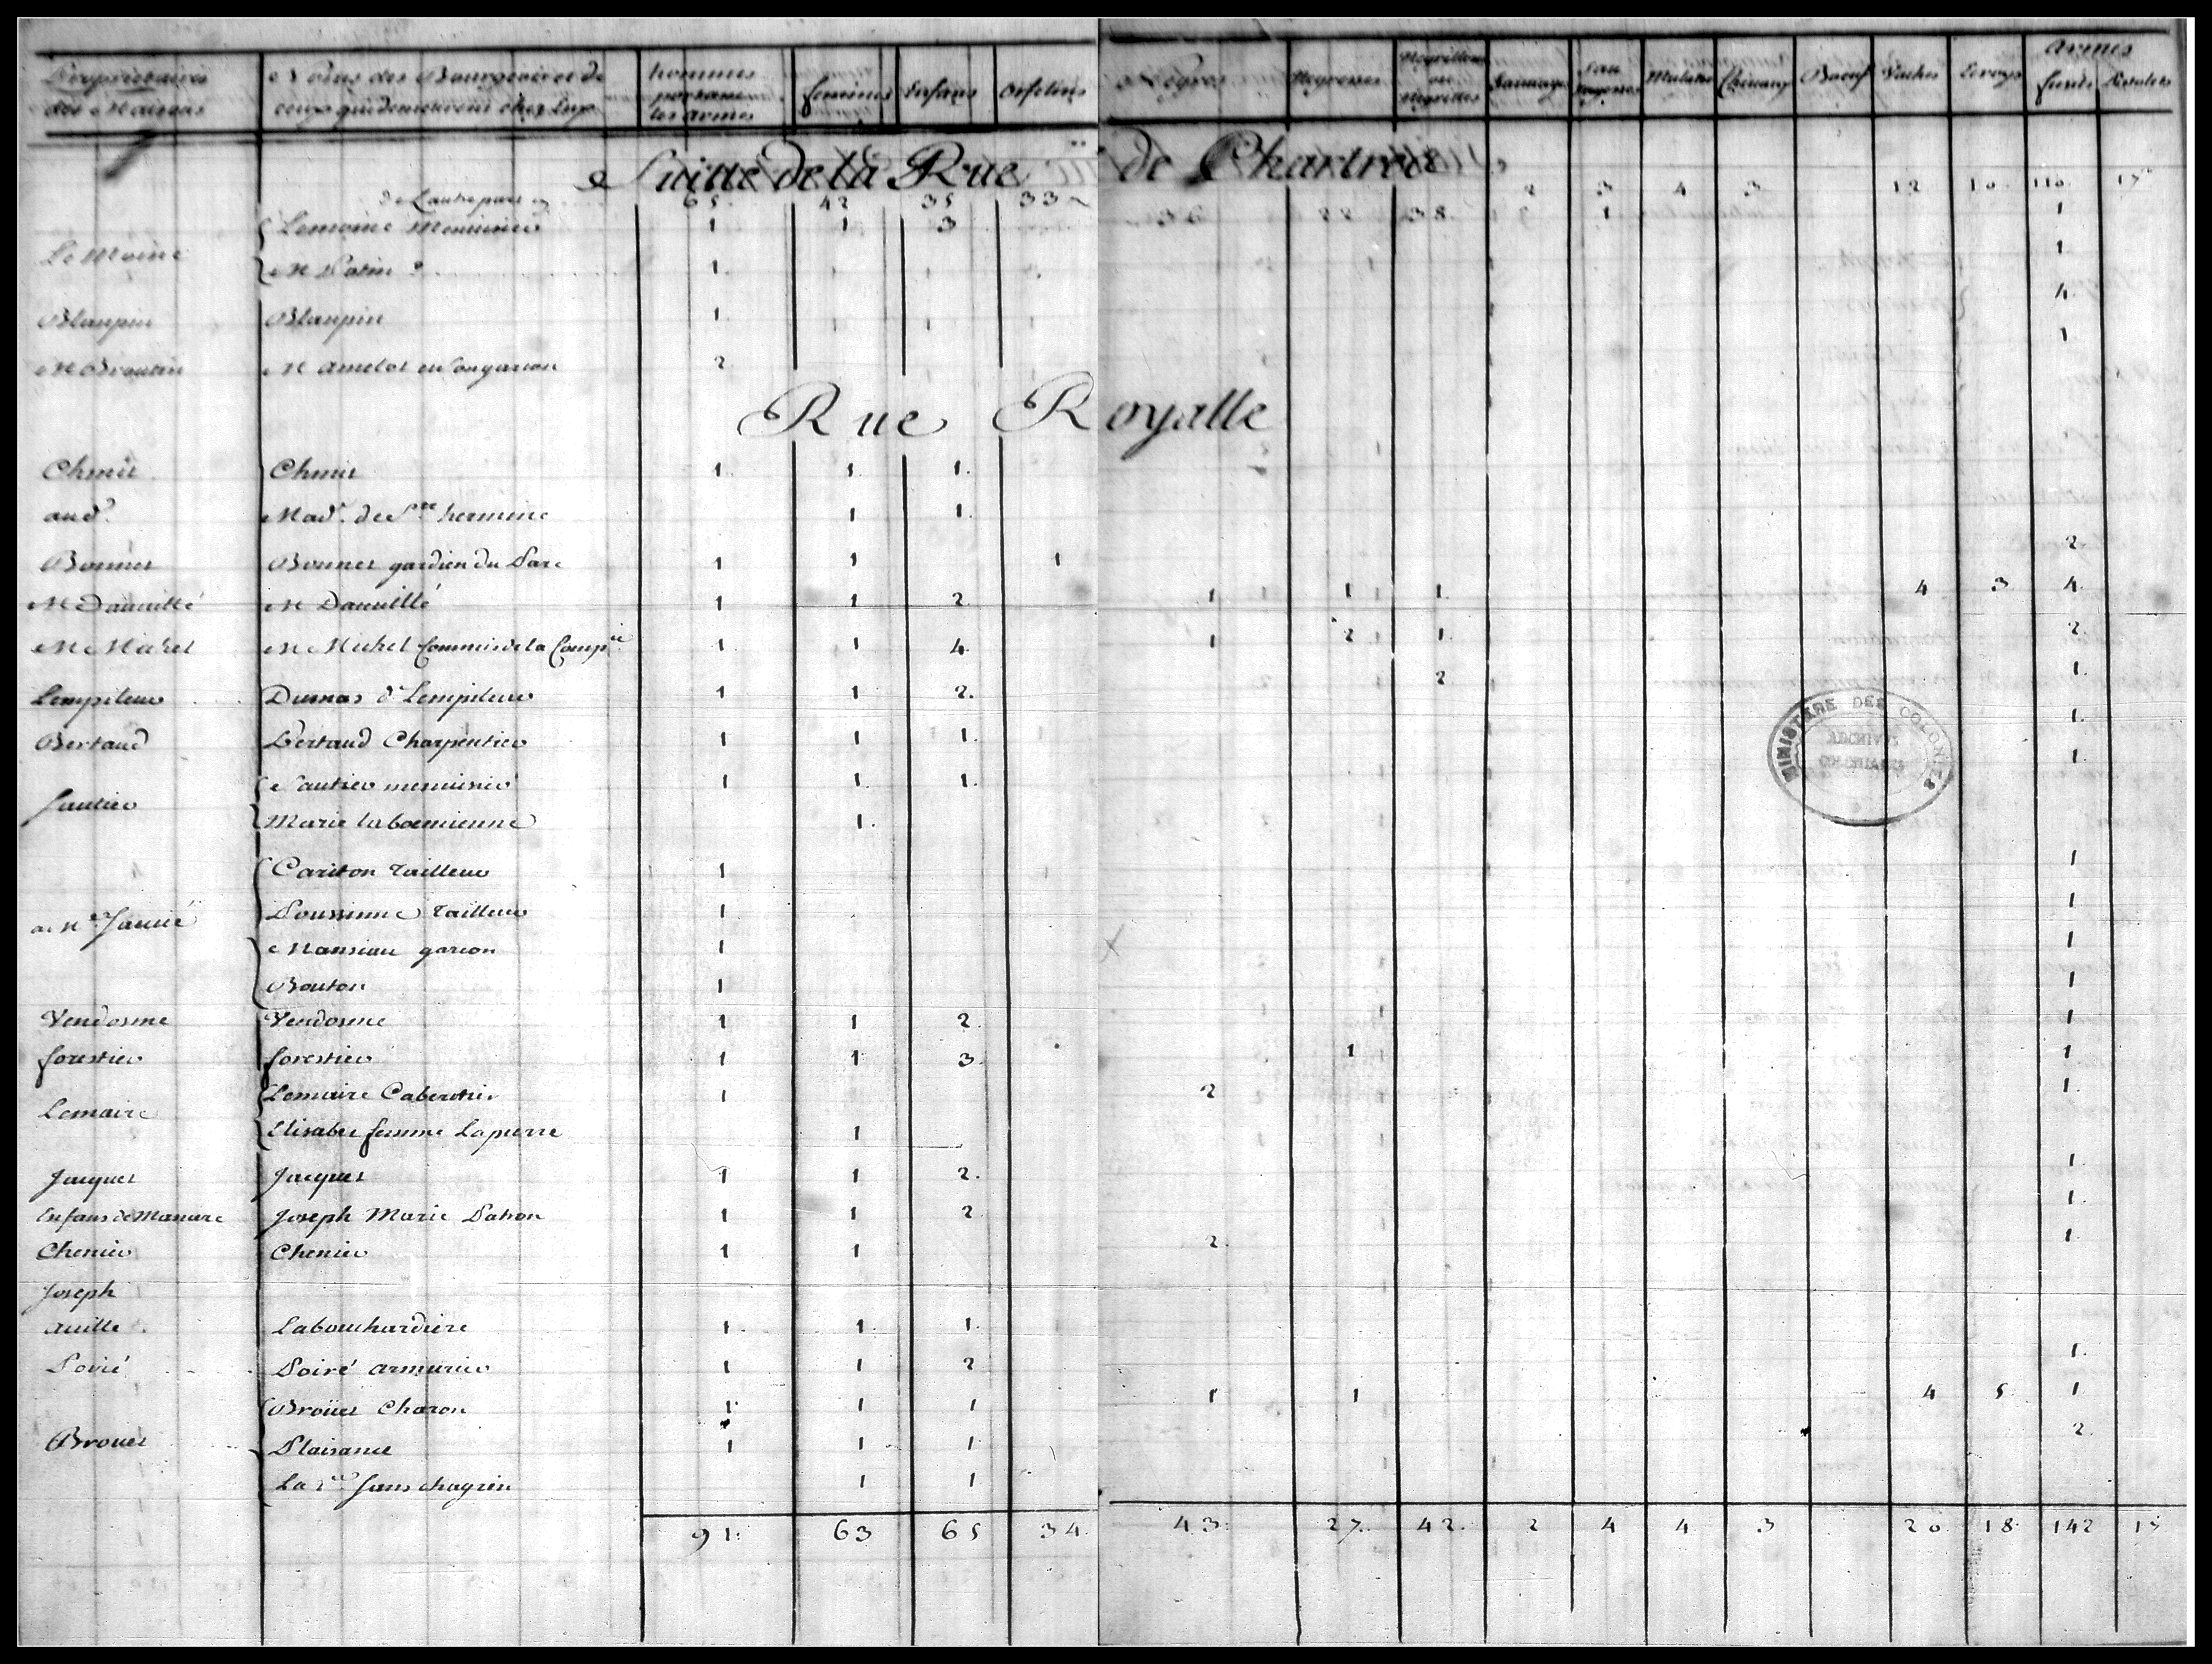 1732 census, New Orleans, Louisiana, pp. 8-9